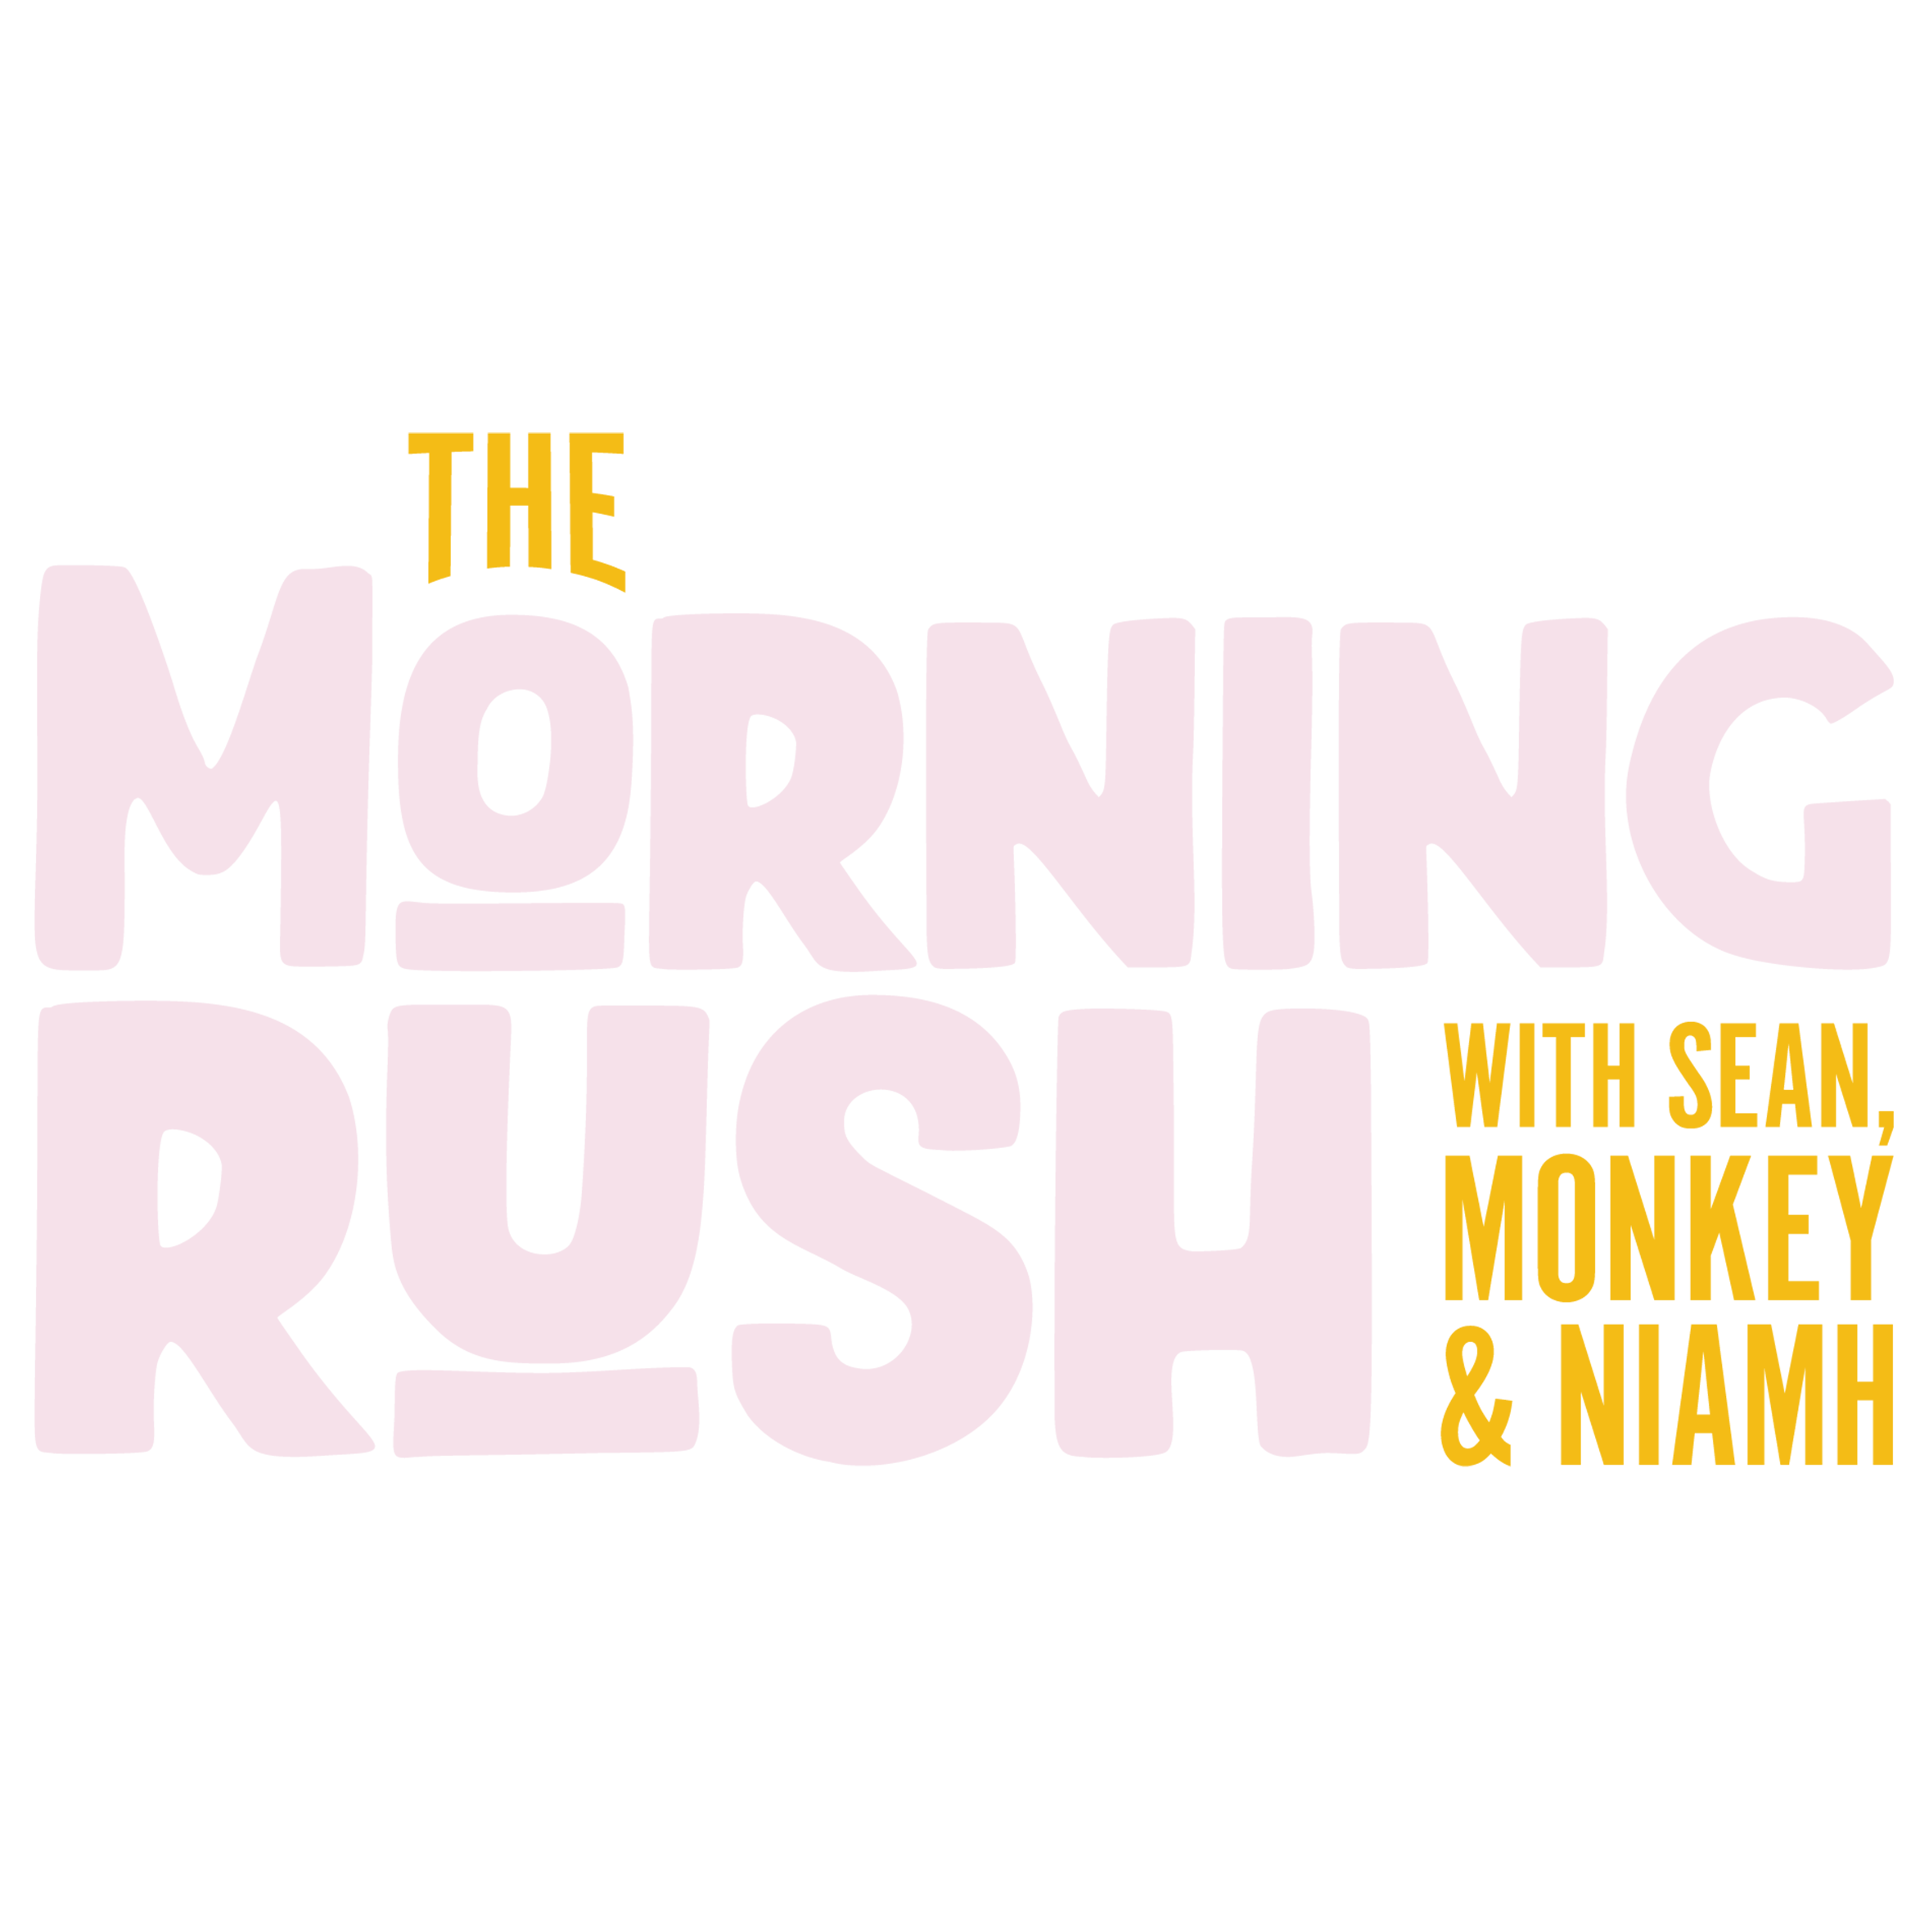 The Morning Rush